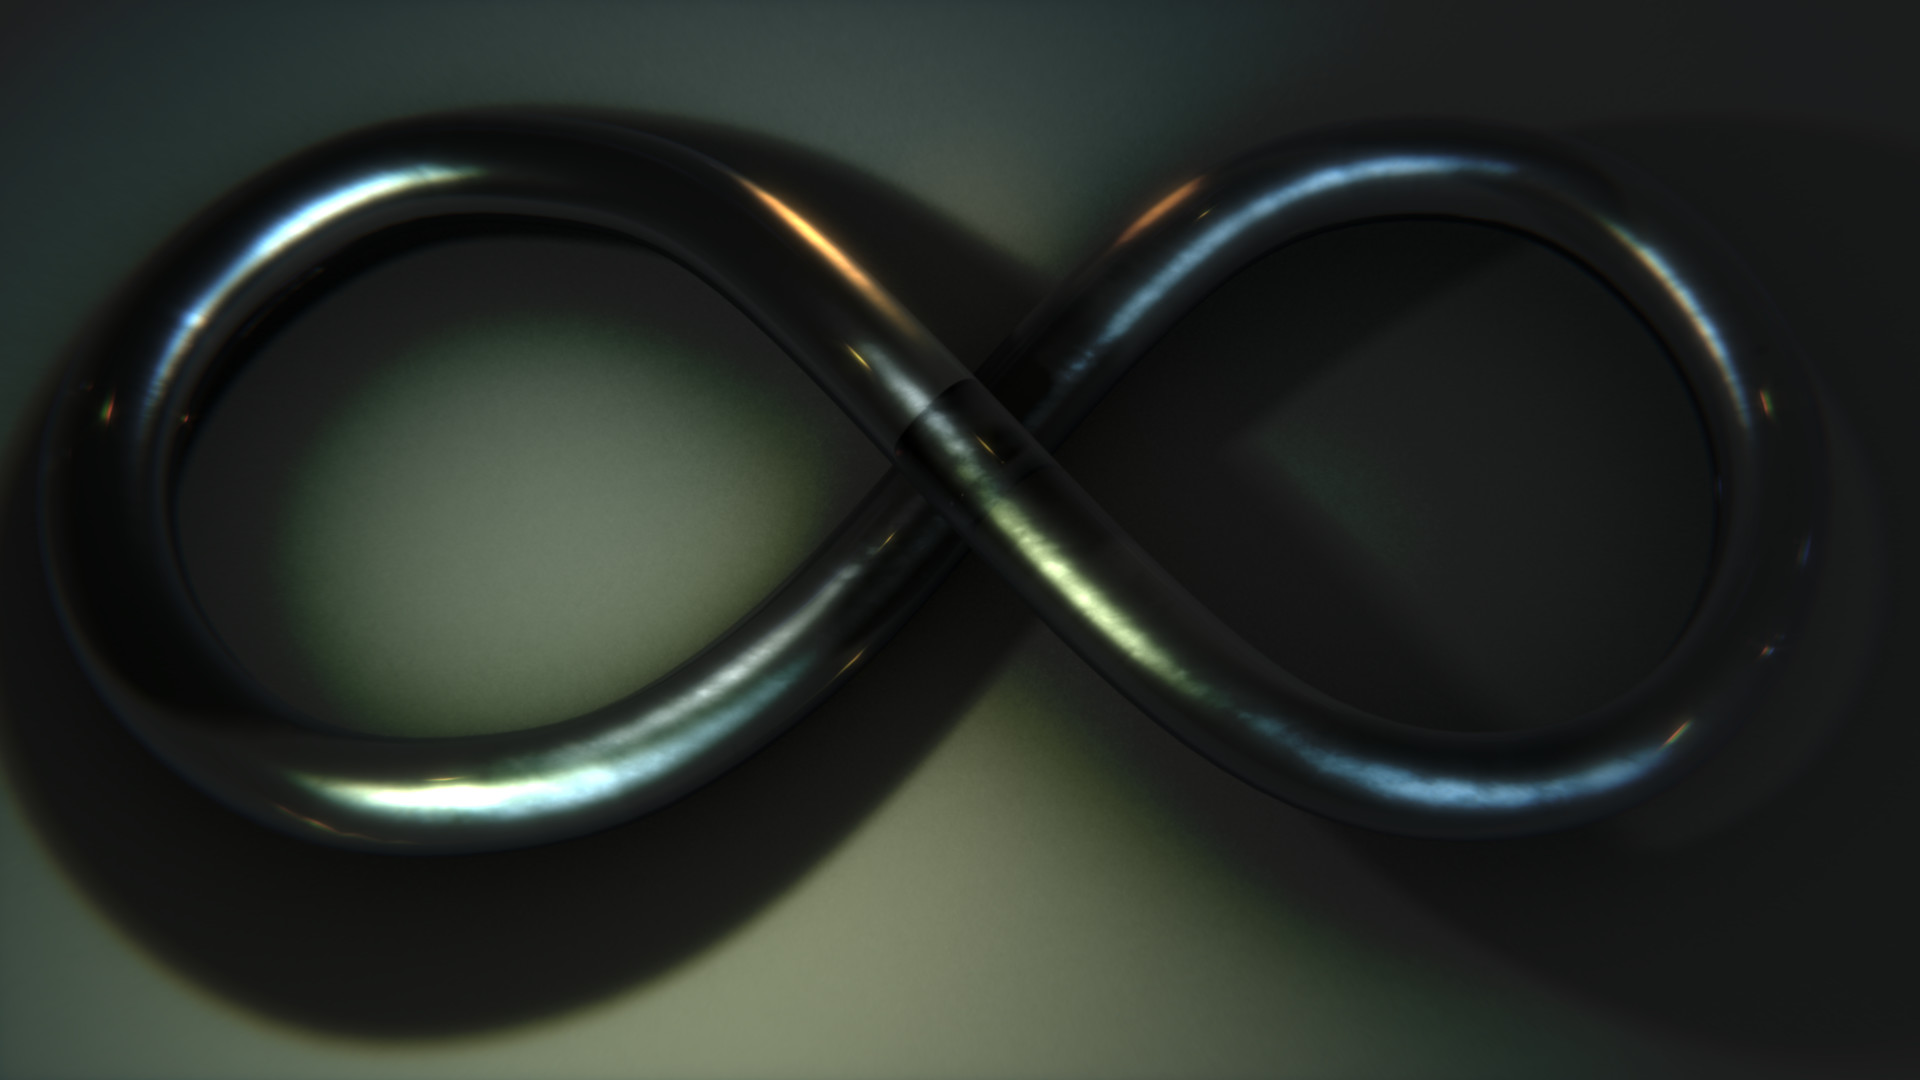 1920x1080 infinity symbol by JoaoYates on DeviantArt